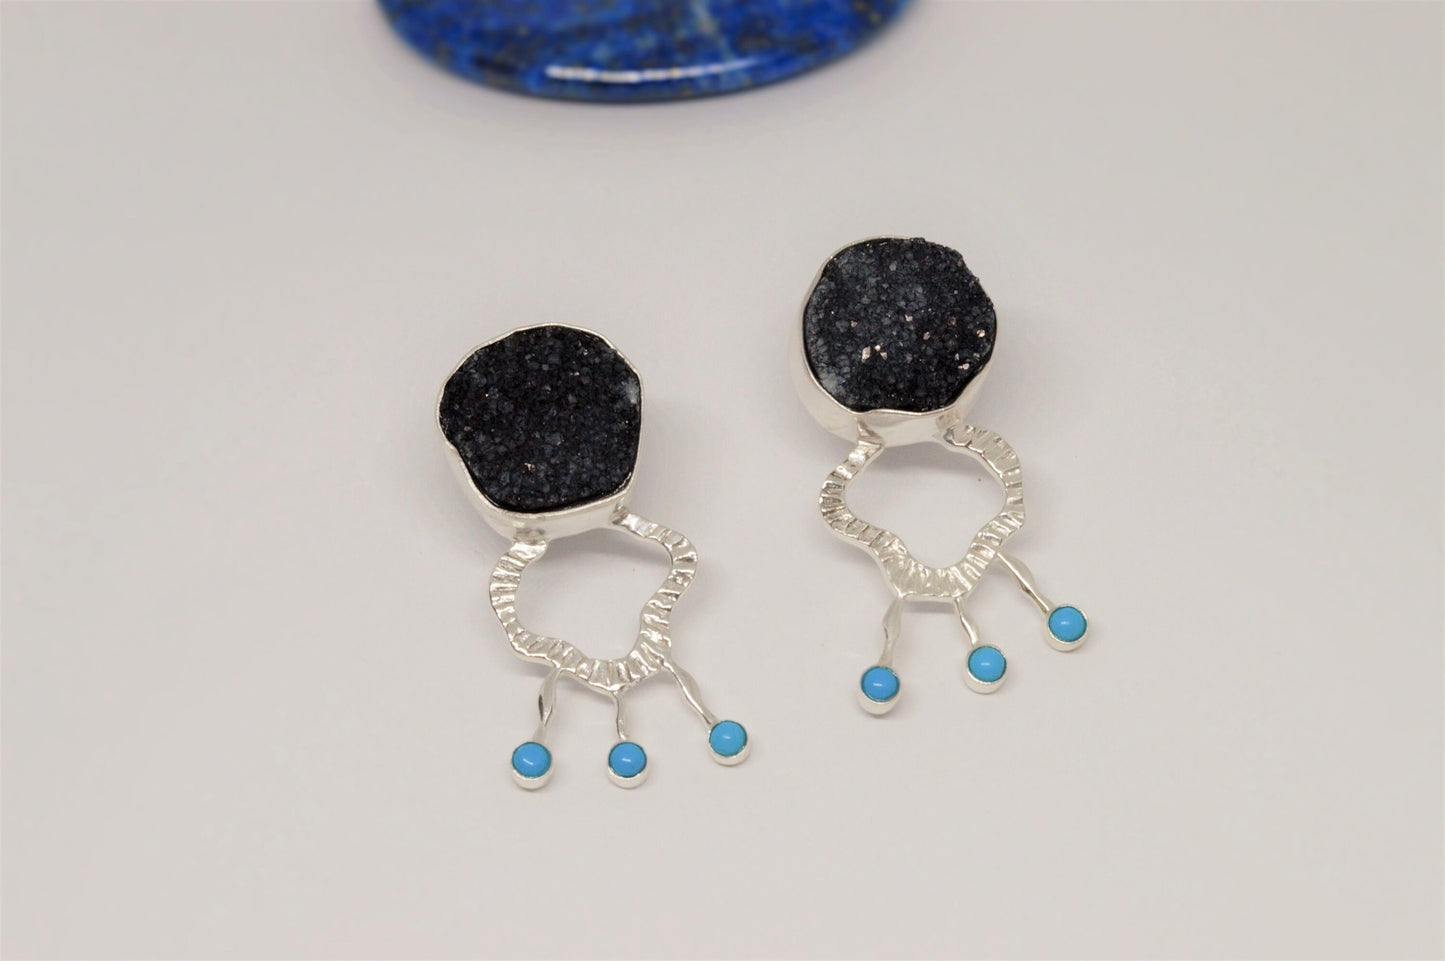 Black Agate, Turquoise Silver Earrings, Unique Black Druzy Earrings, Turquoise Jewelry, December Birthstone, Unique Statement Earrings